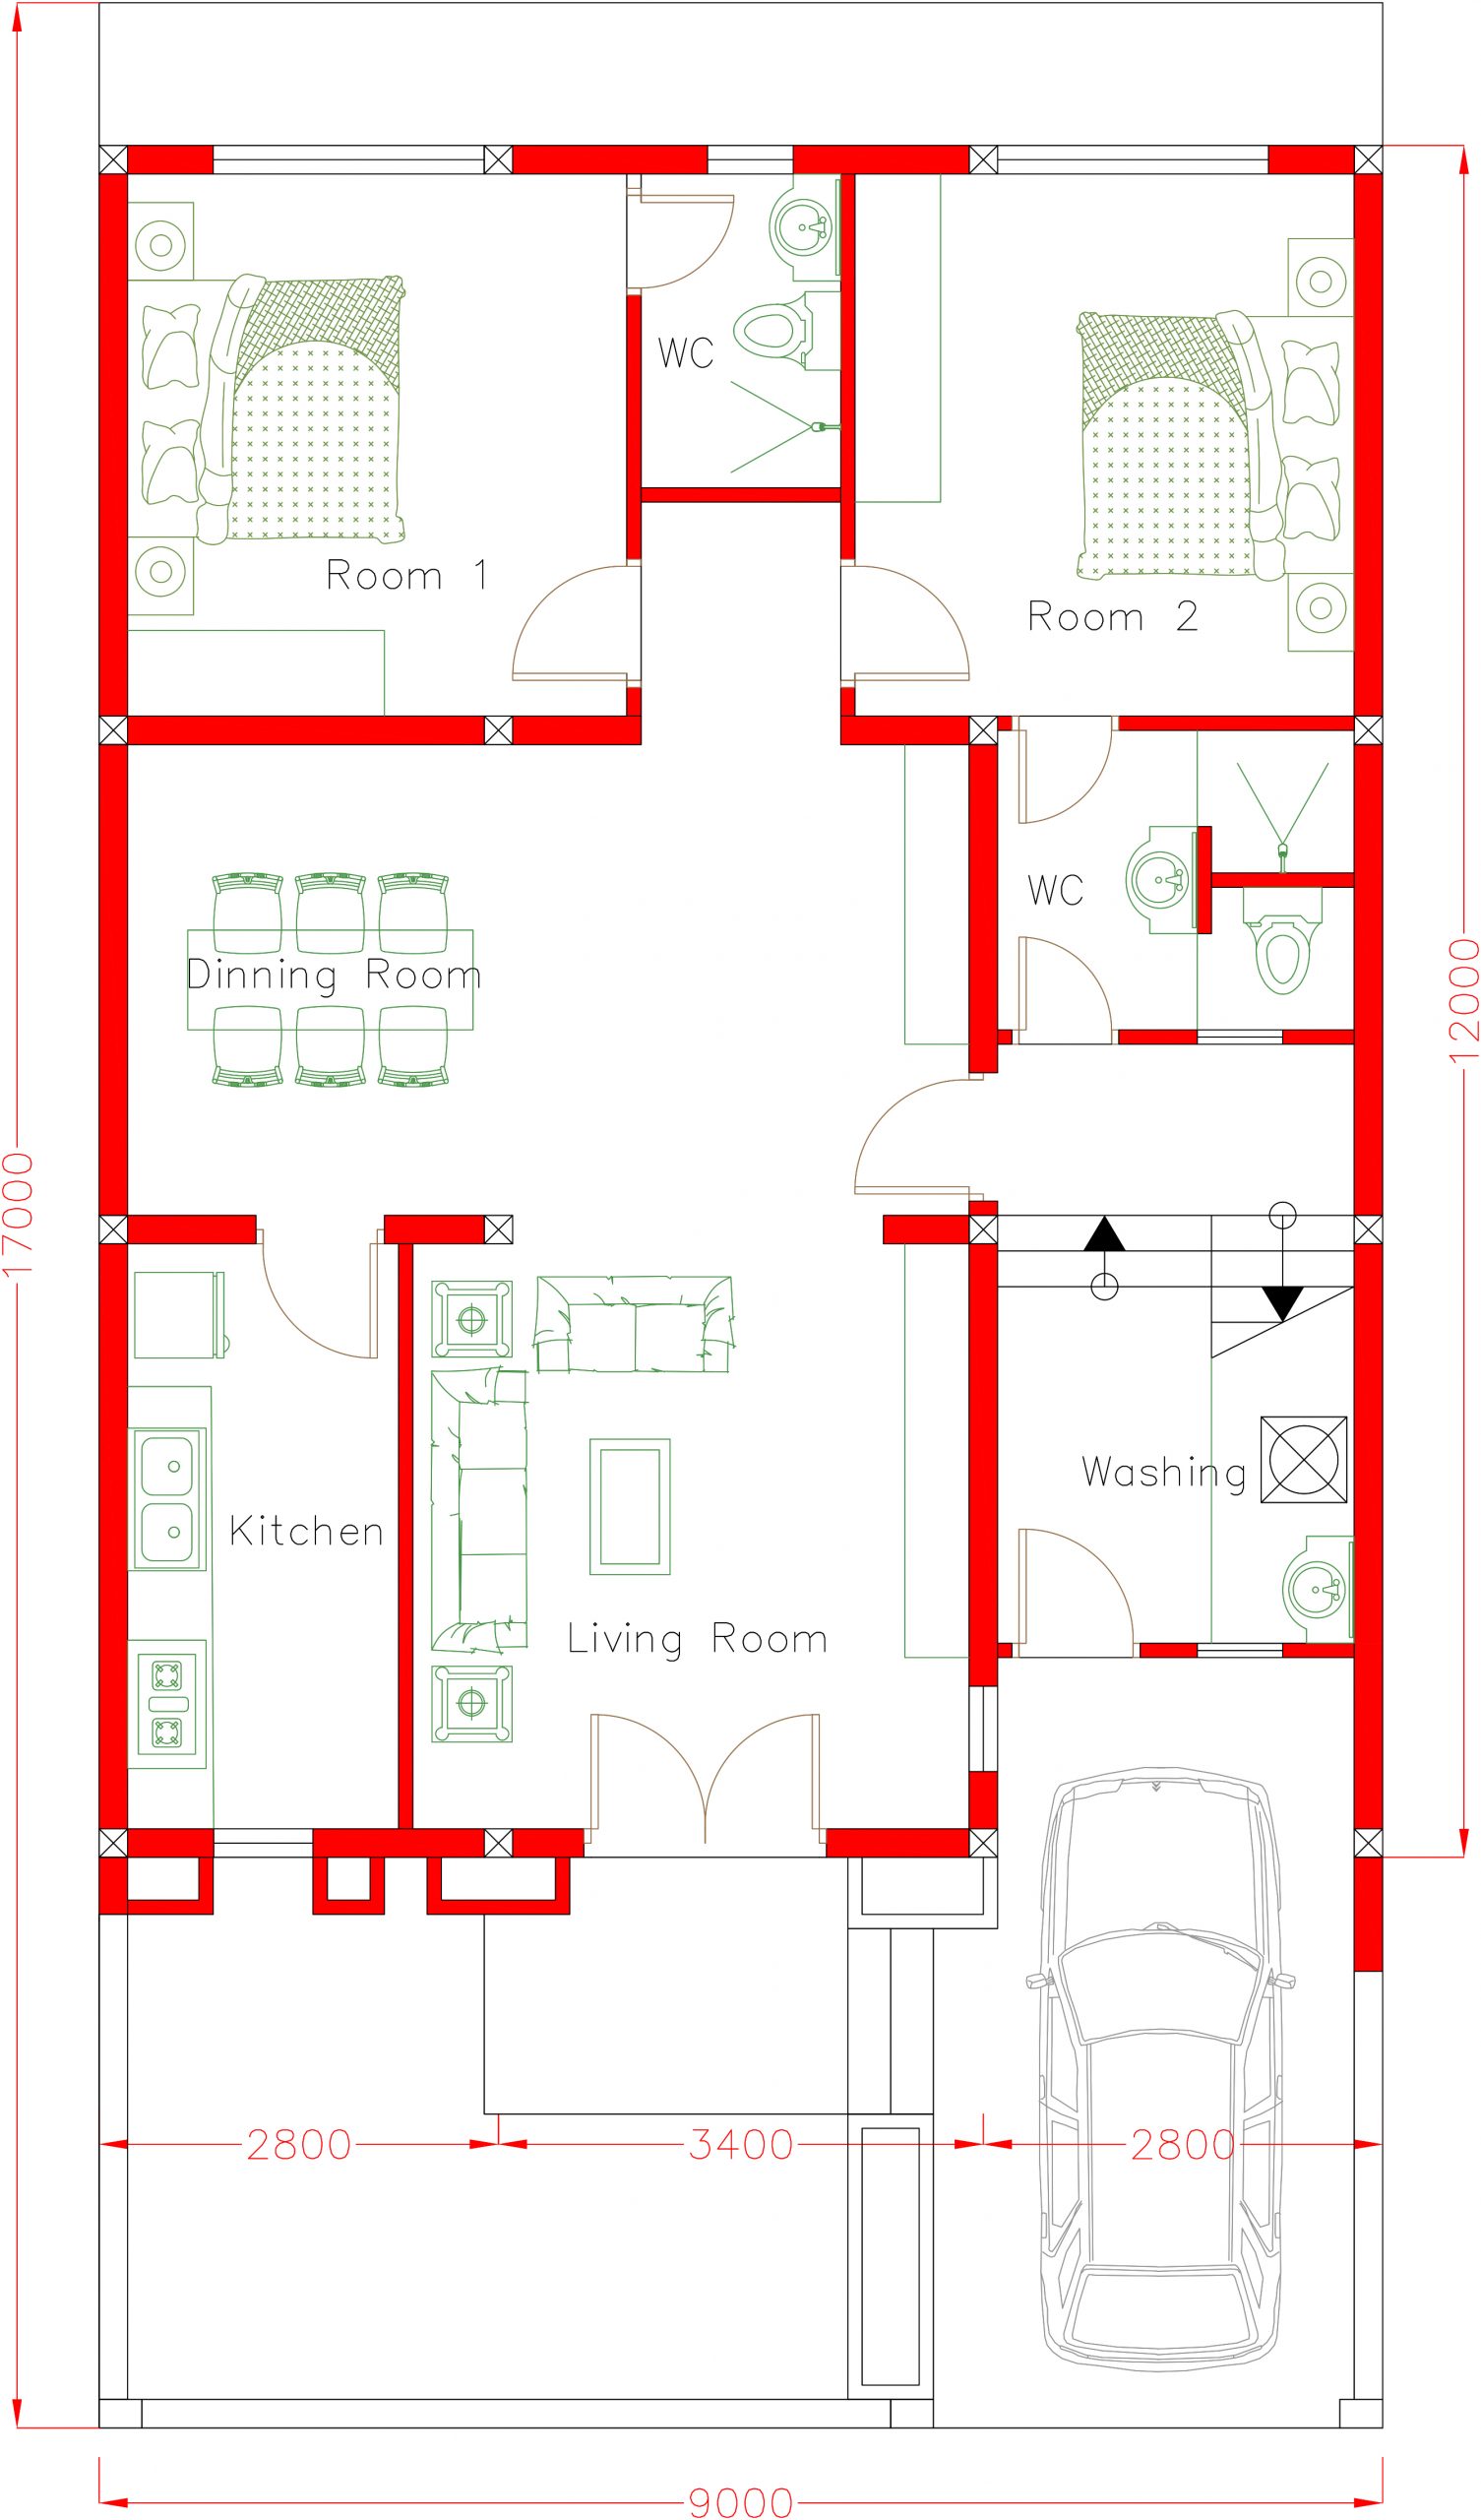 House layout floor plan